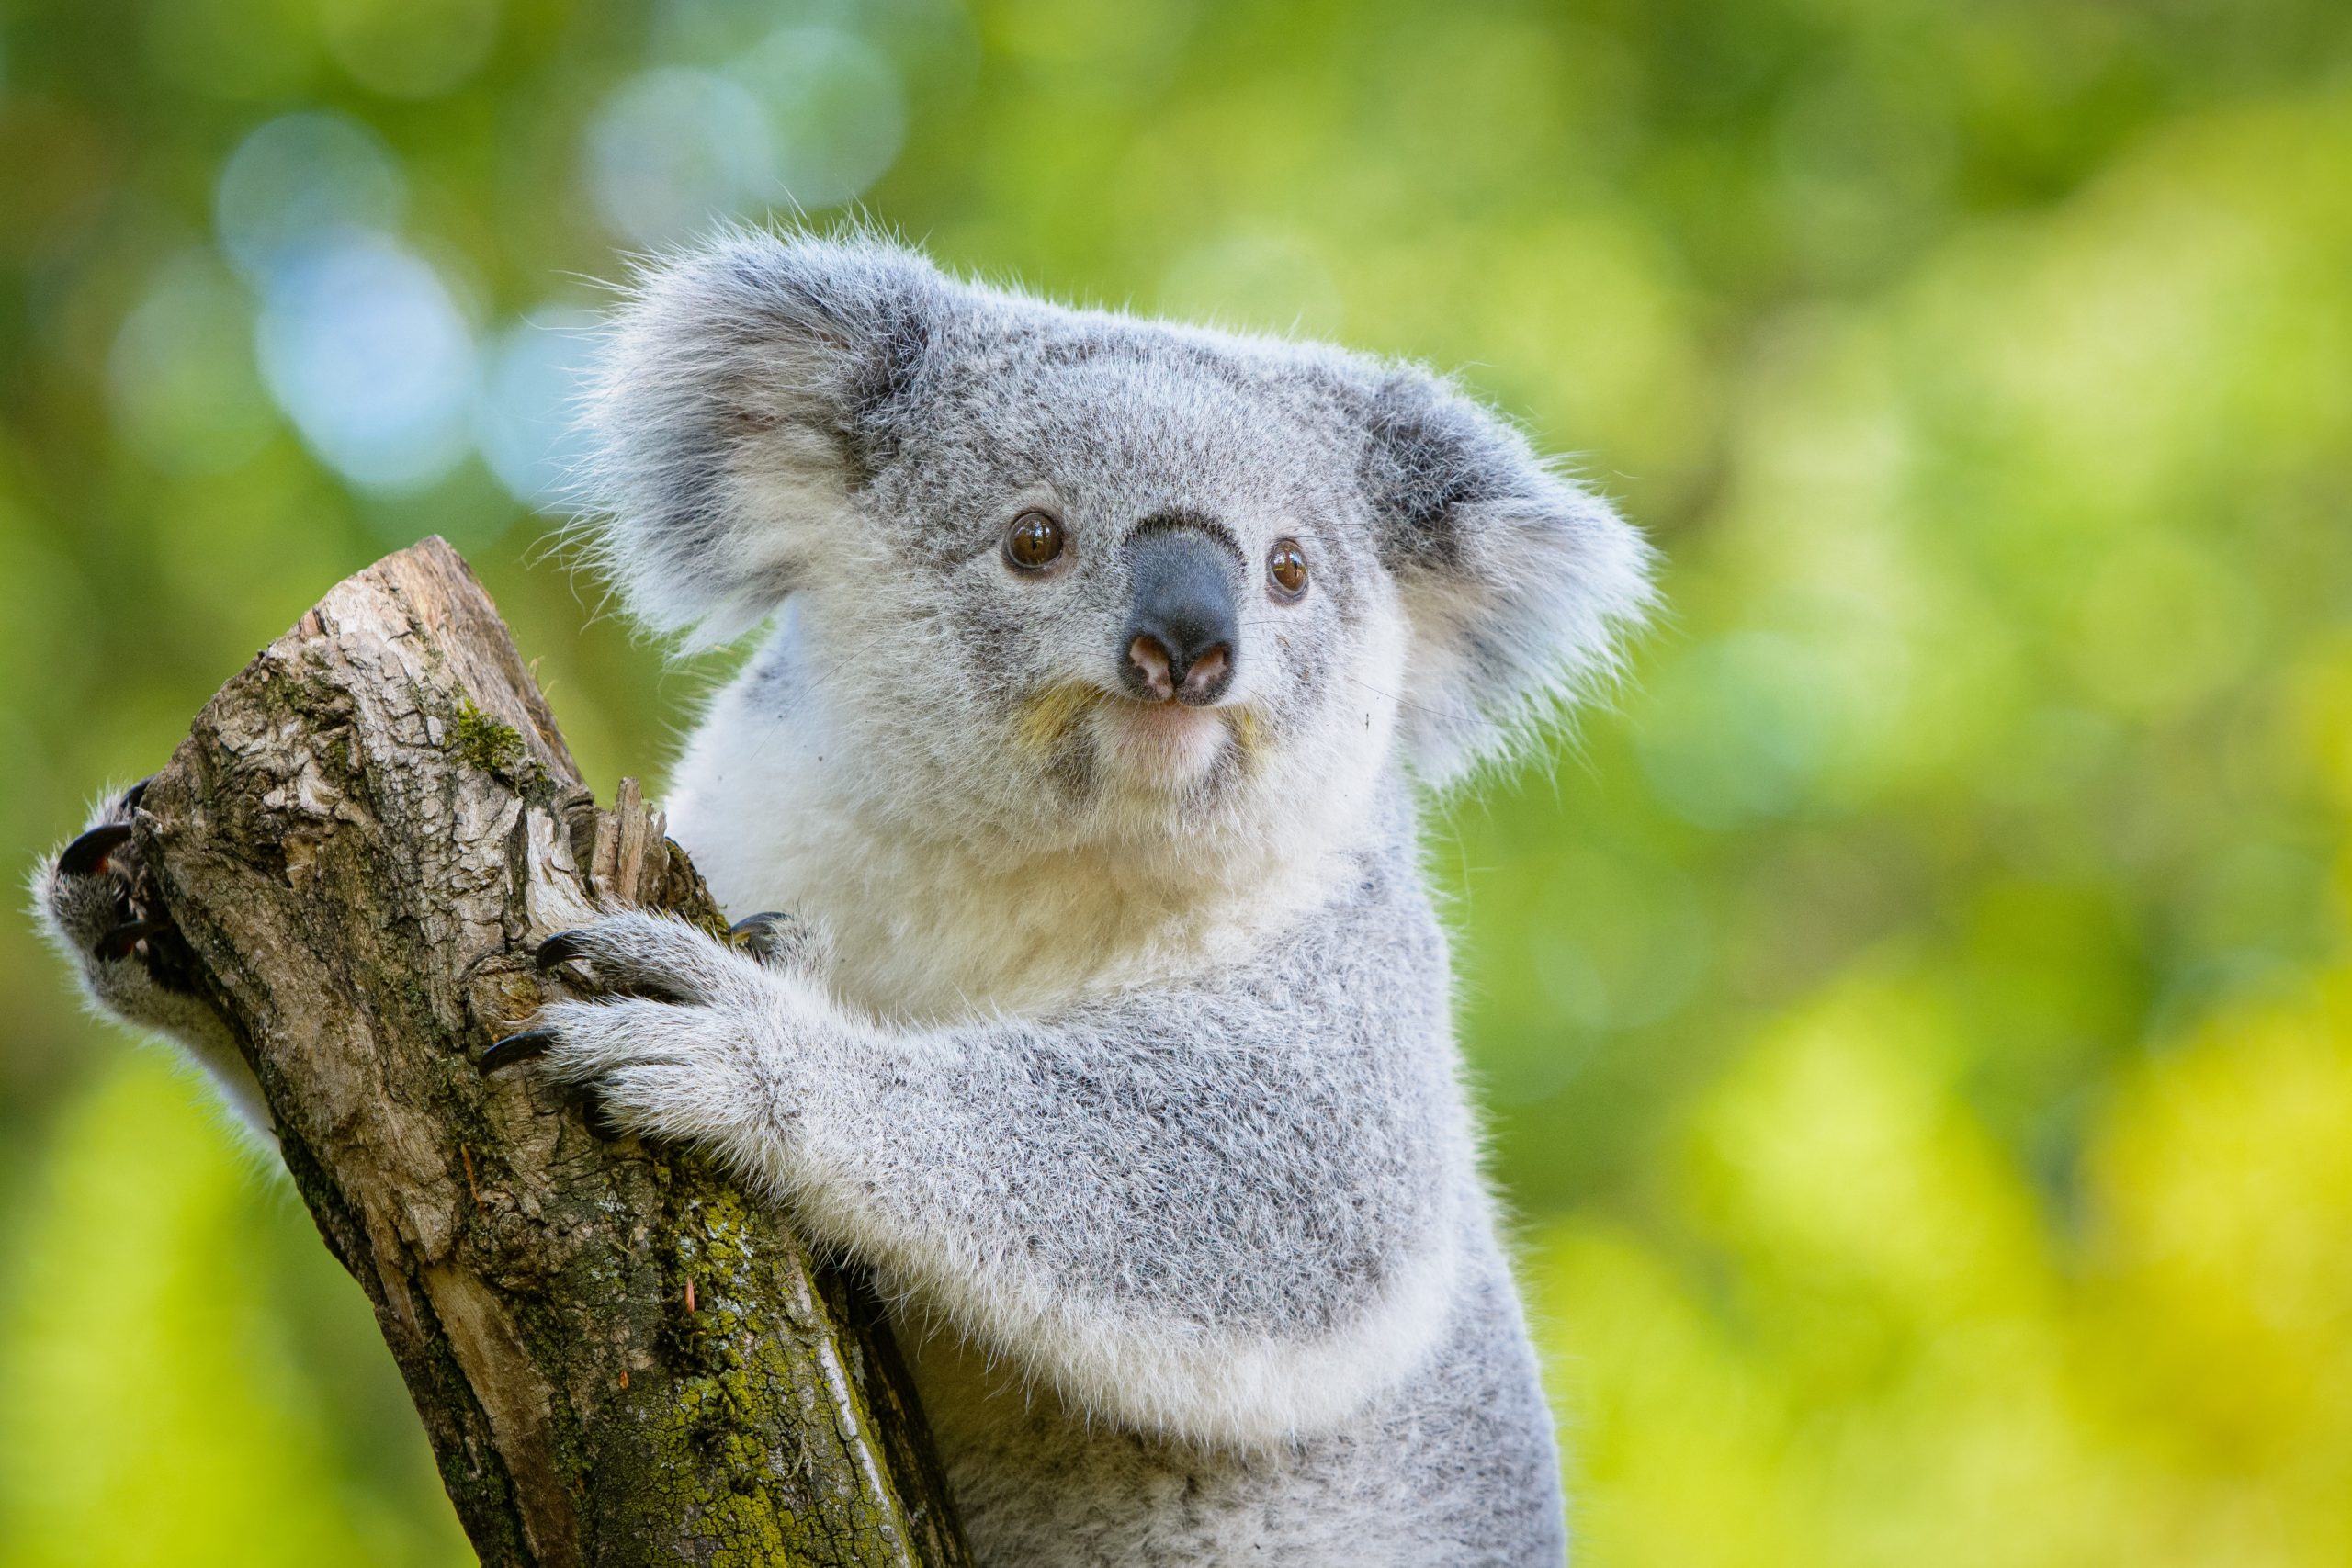 Bangalow Koalas  The International Wildlife Coexistence Network